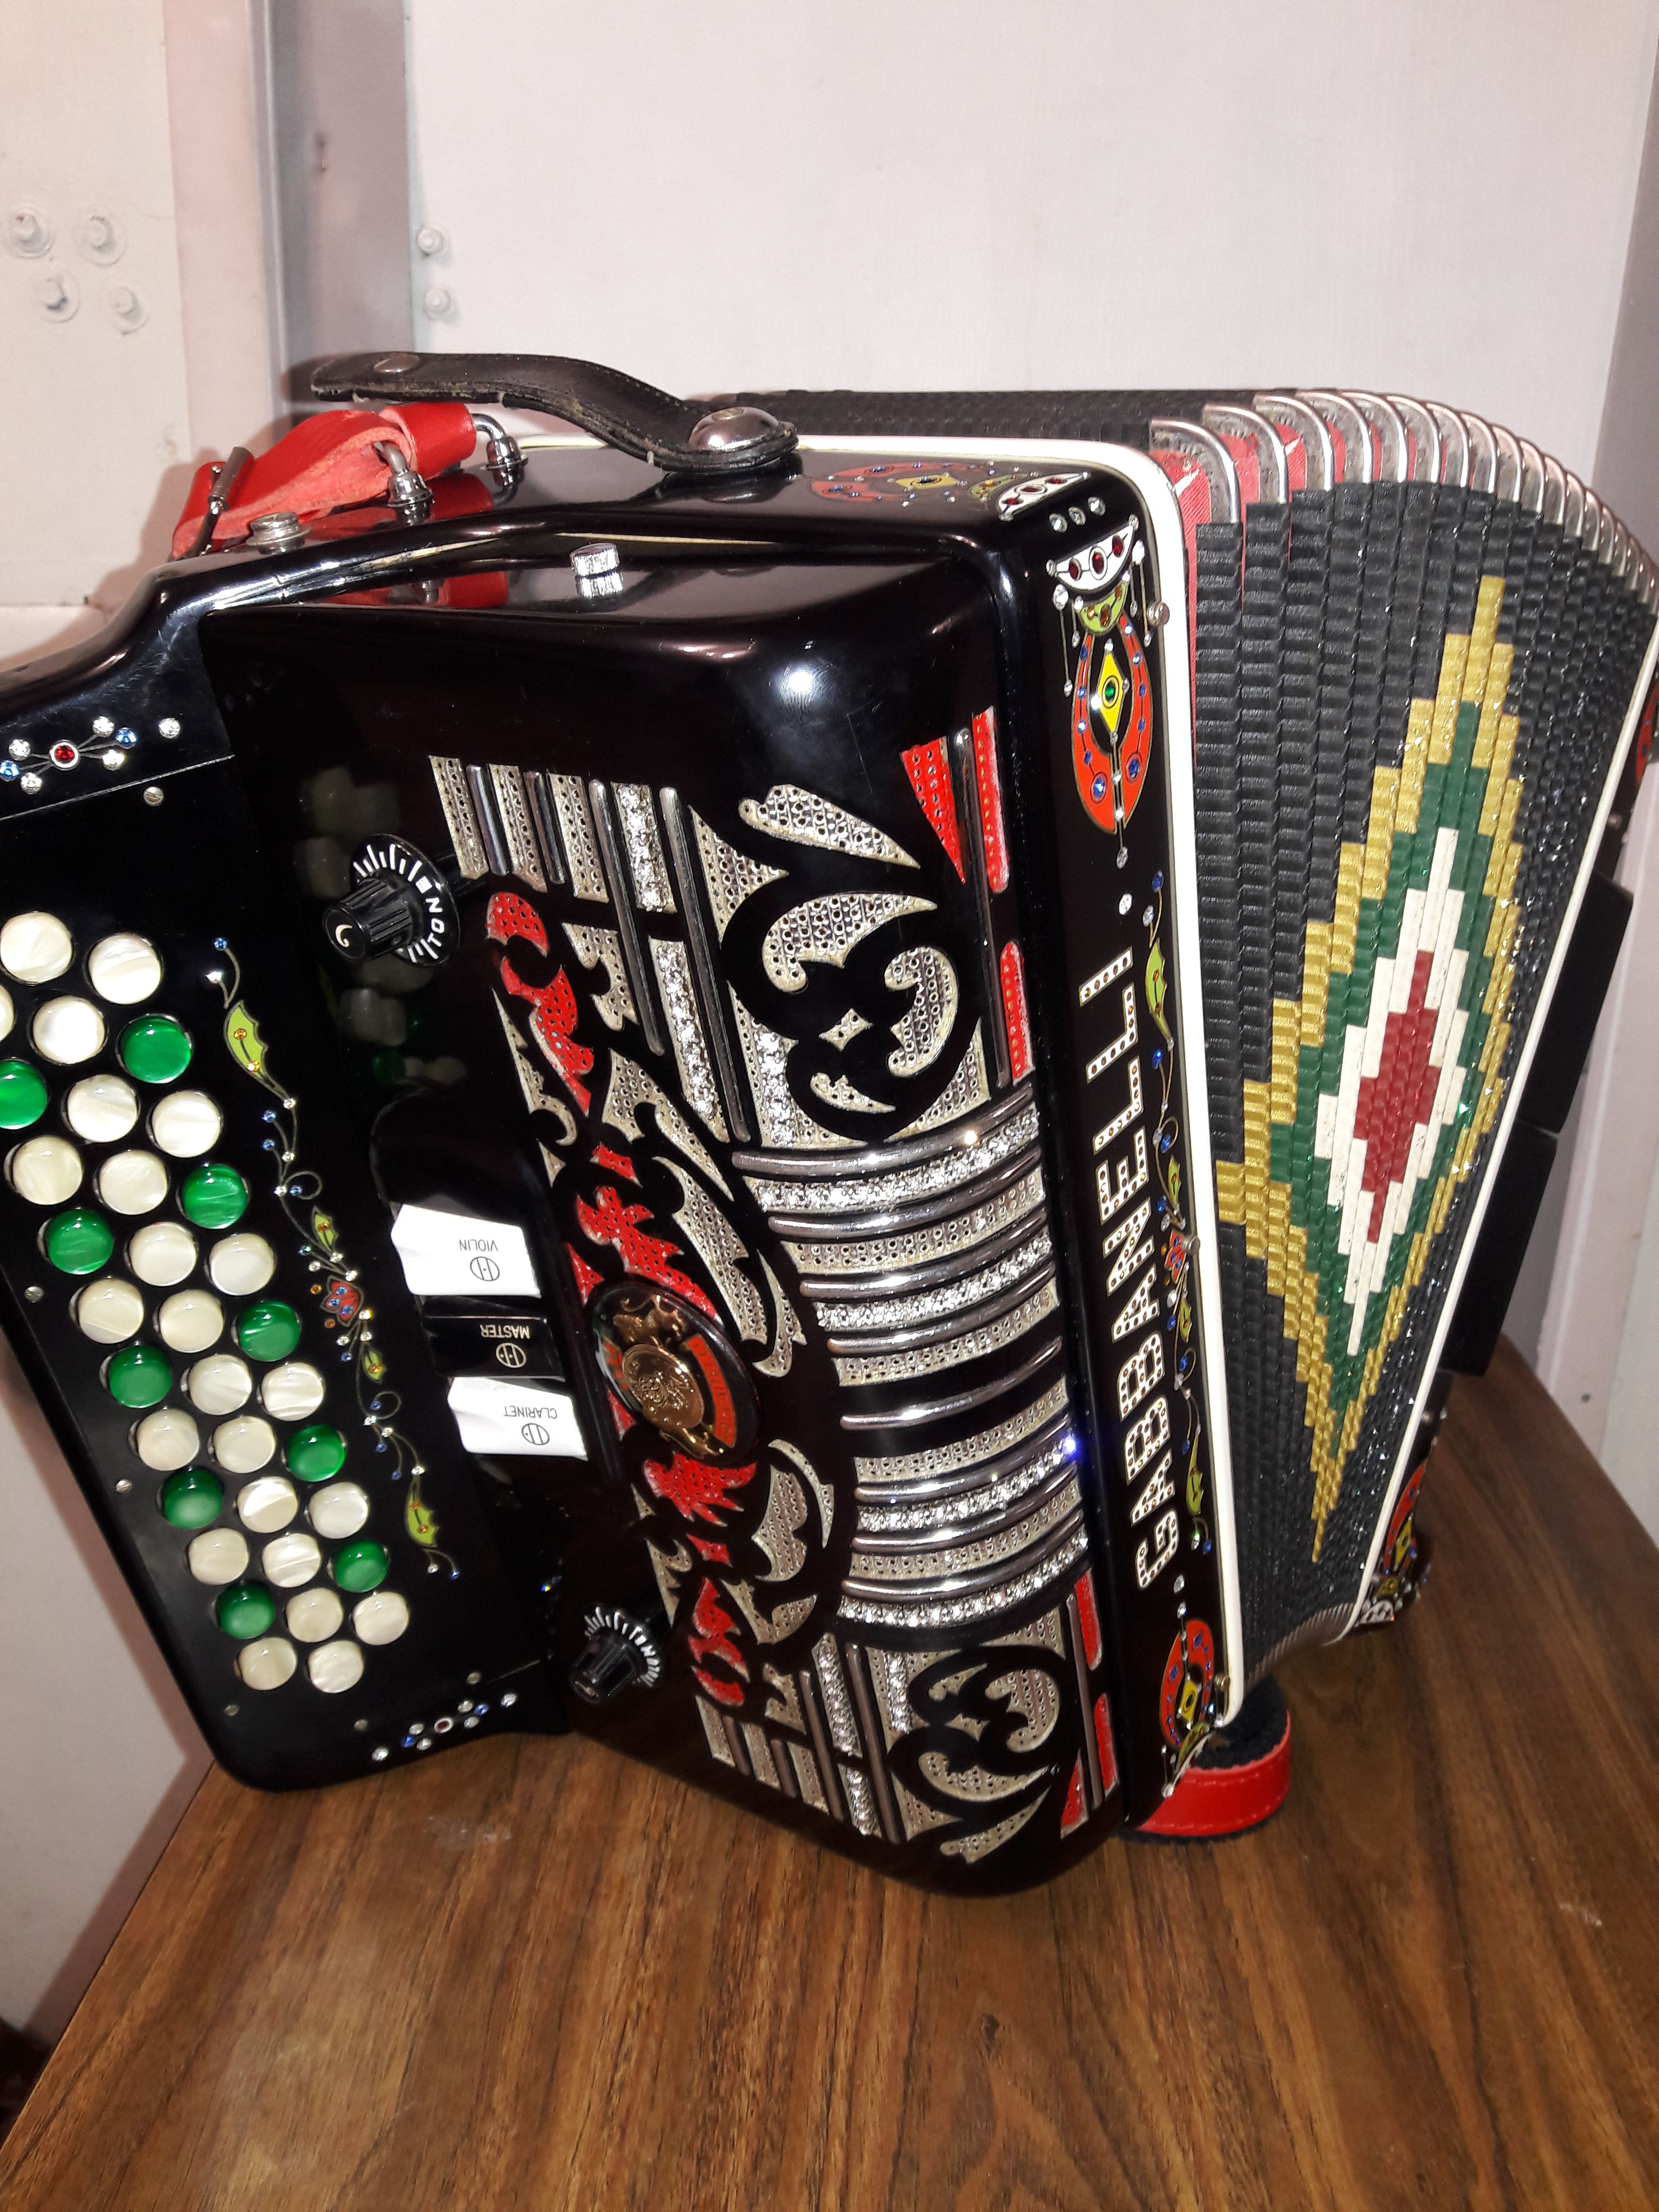 Gabbanelli accordion 3 switch for Sale in Riverside, CA - OfferUp